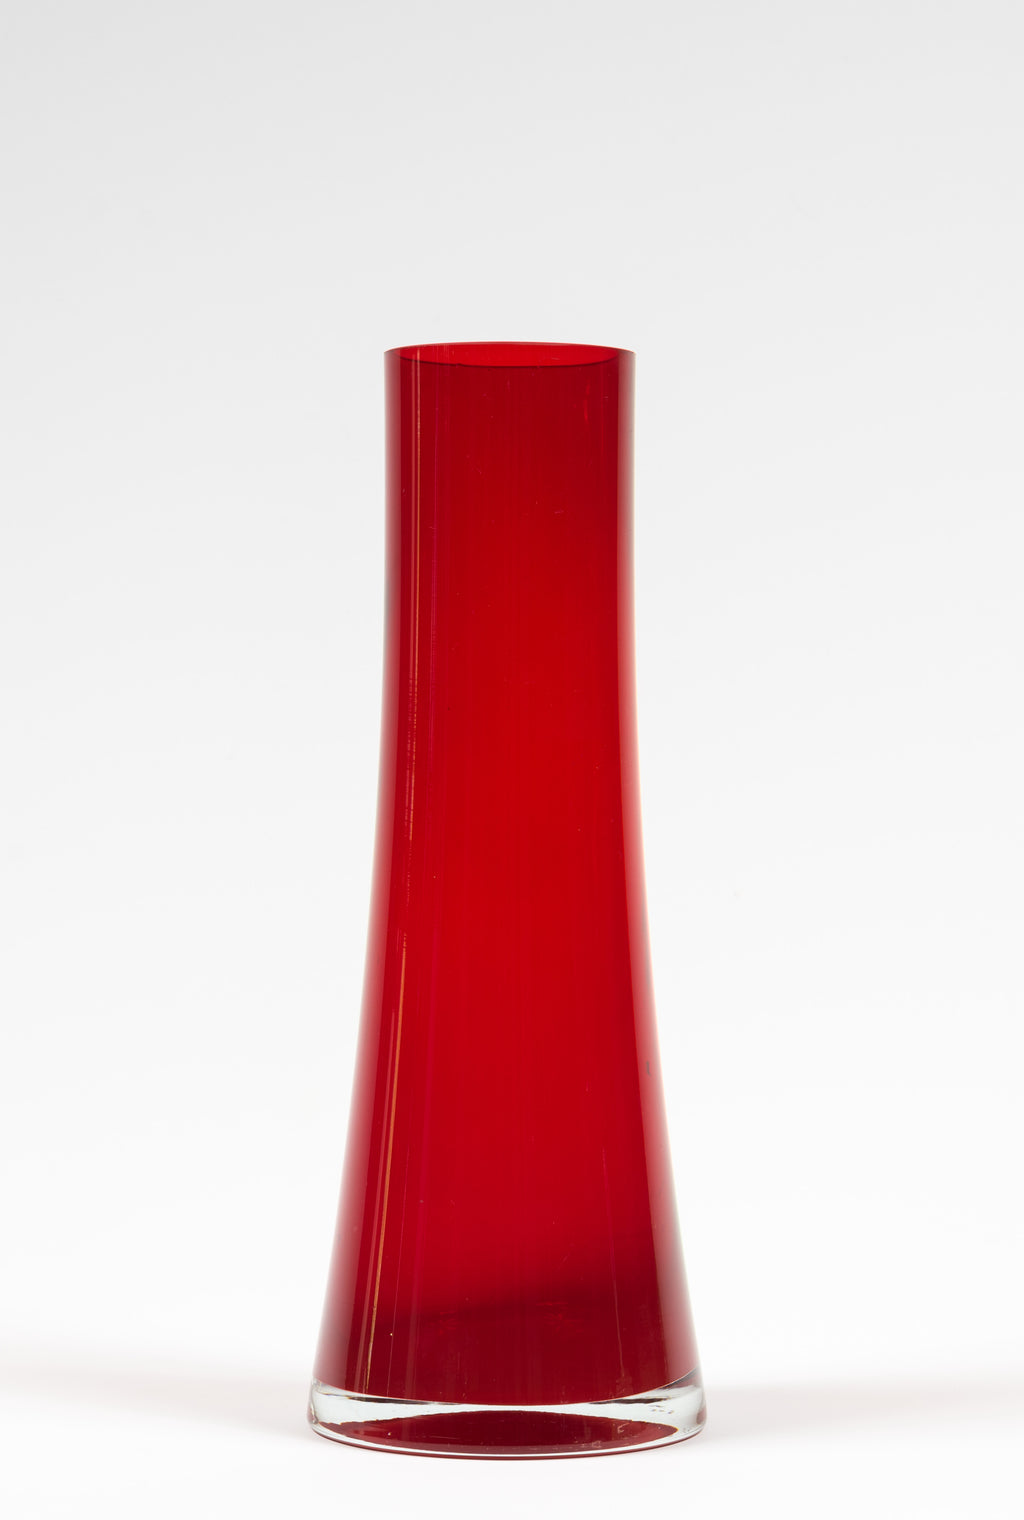 Riihimäen Lasi Oy / Riihimaki Red Glass Vase by Tamara Aladin